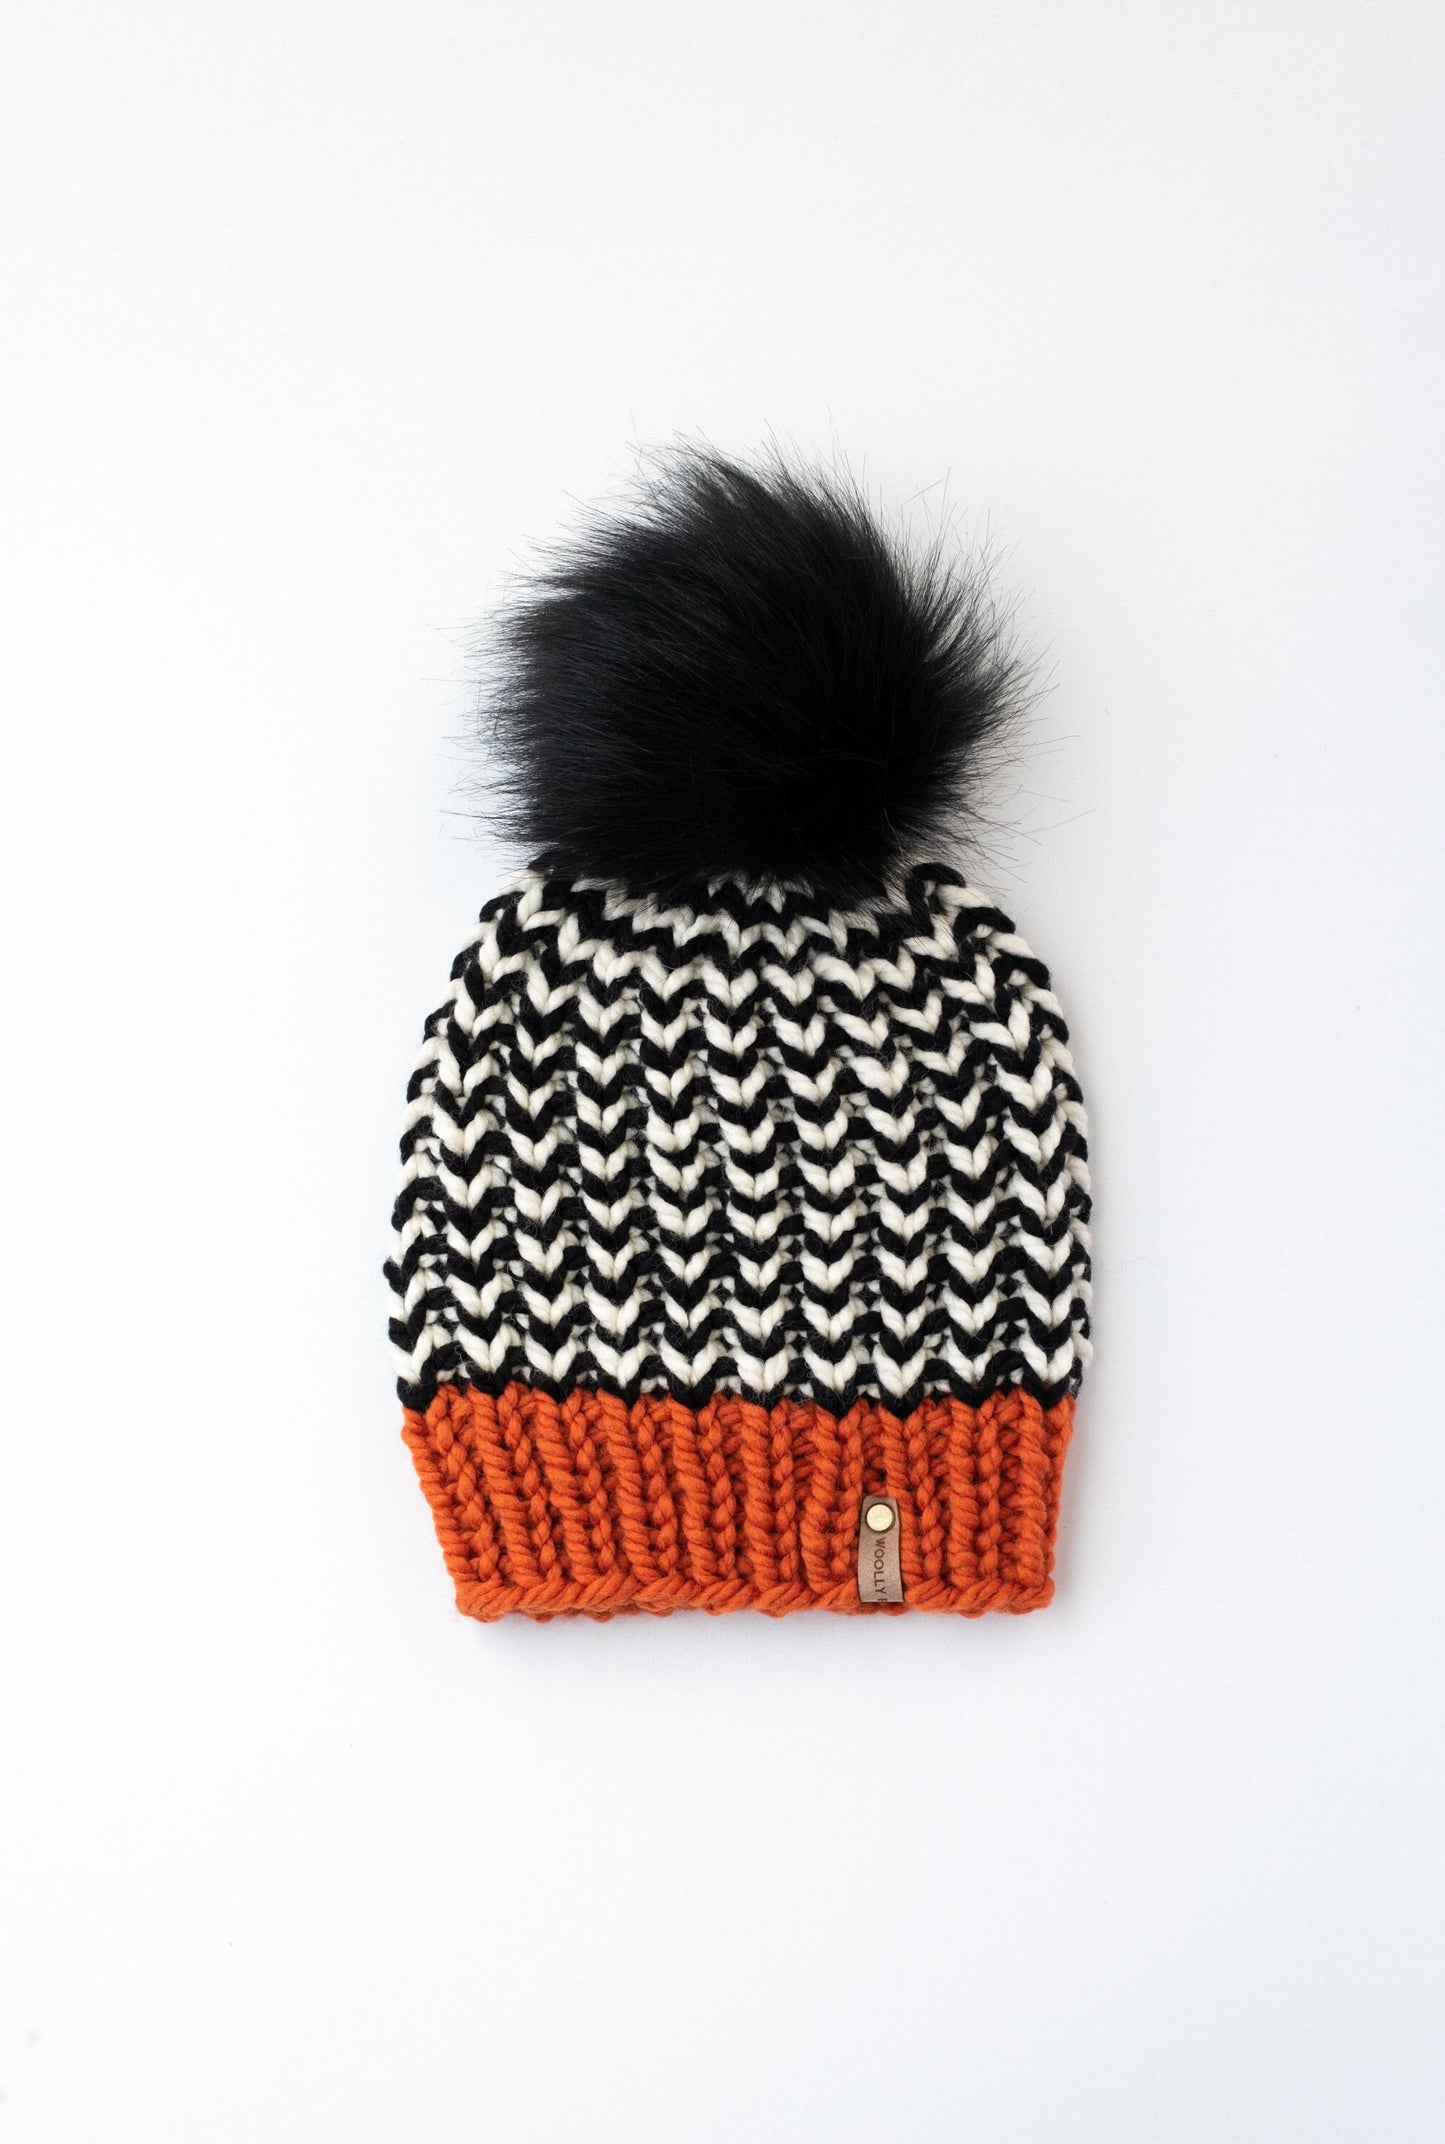 Go Bears Orange and Black Team Color Knit Hat with Faux Fur Pom Pom